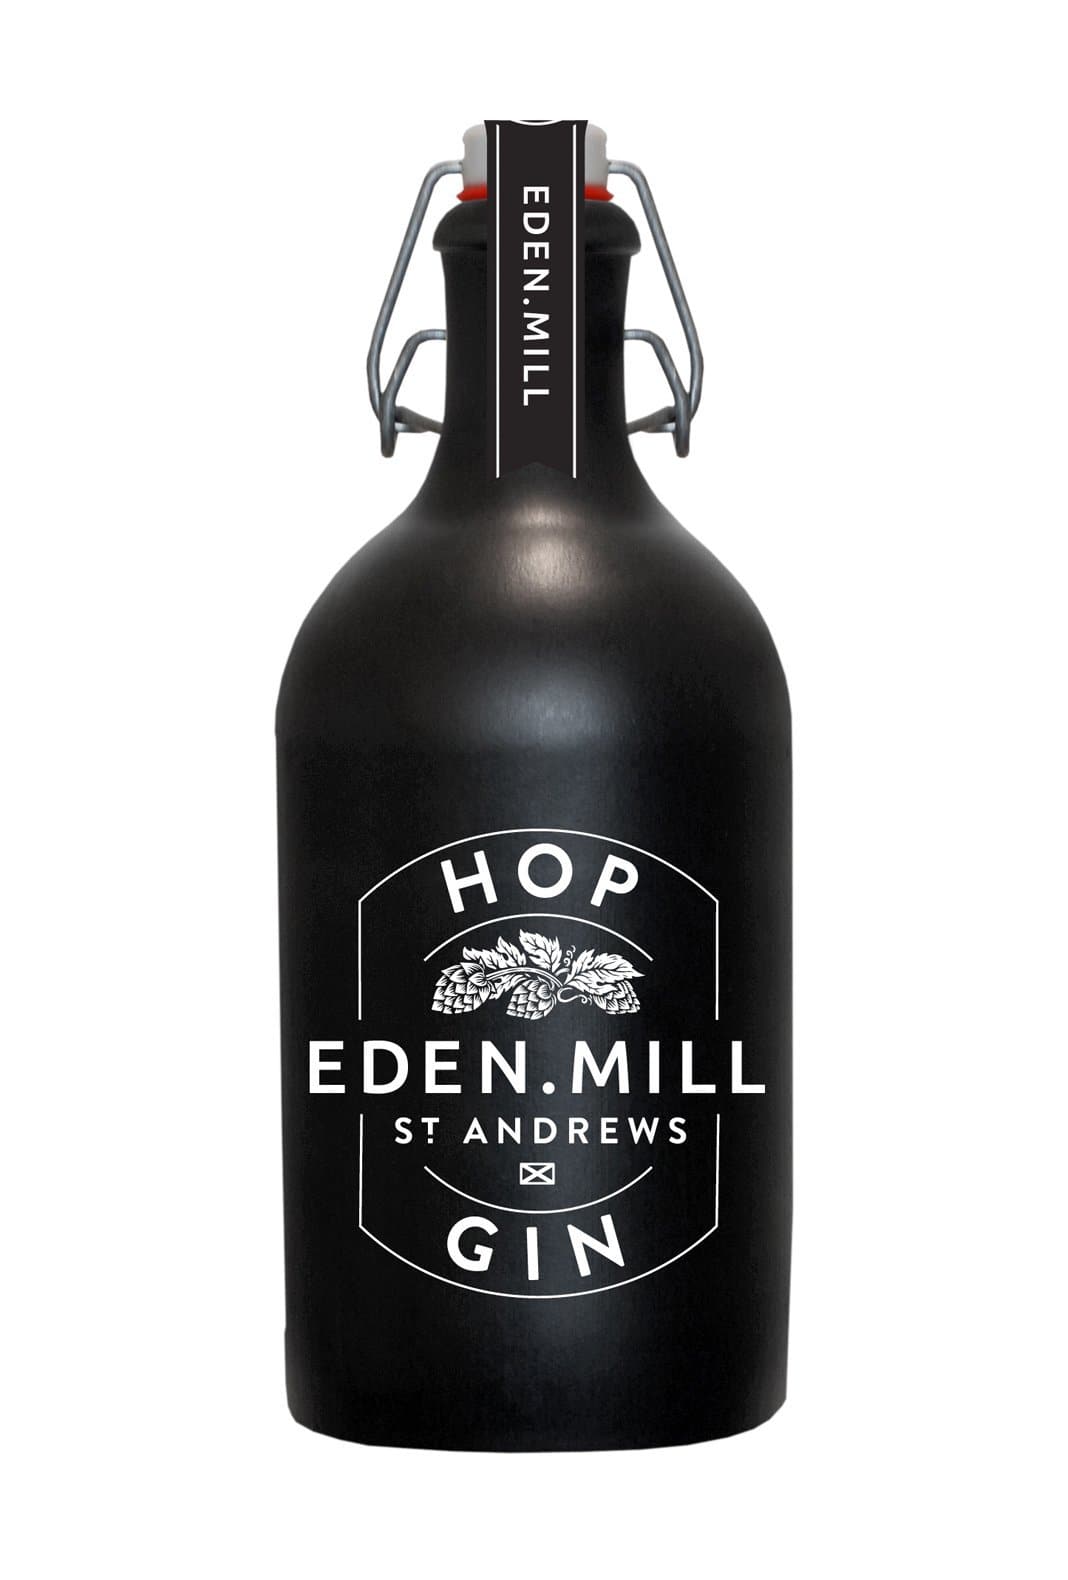 Eden Mill Hop Gin 46% 500ml | Gin | Shop online at Spirits of France